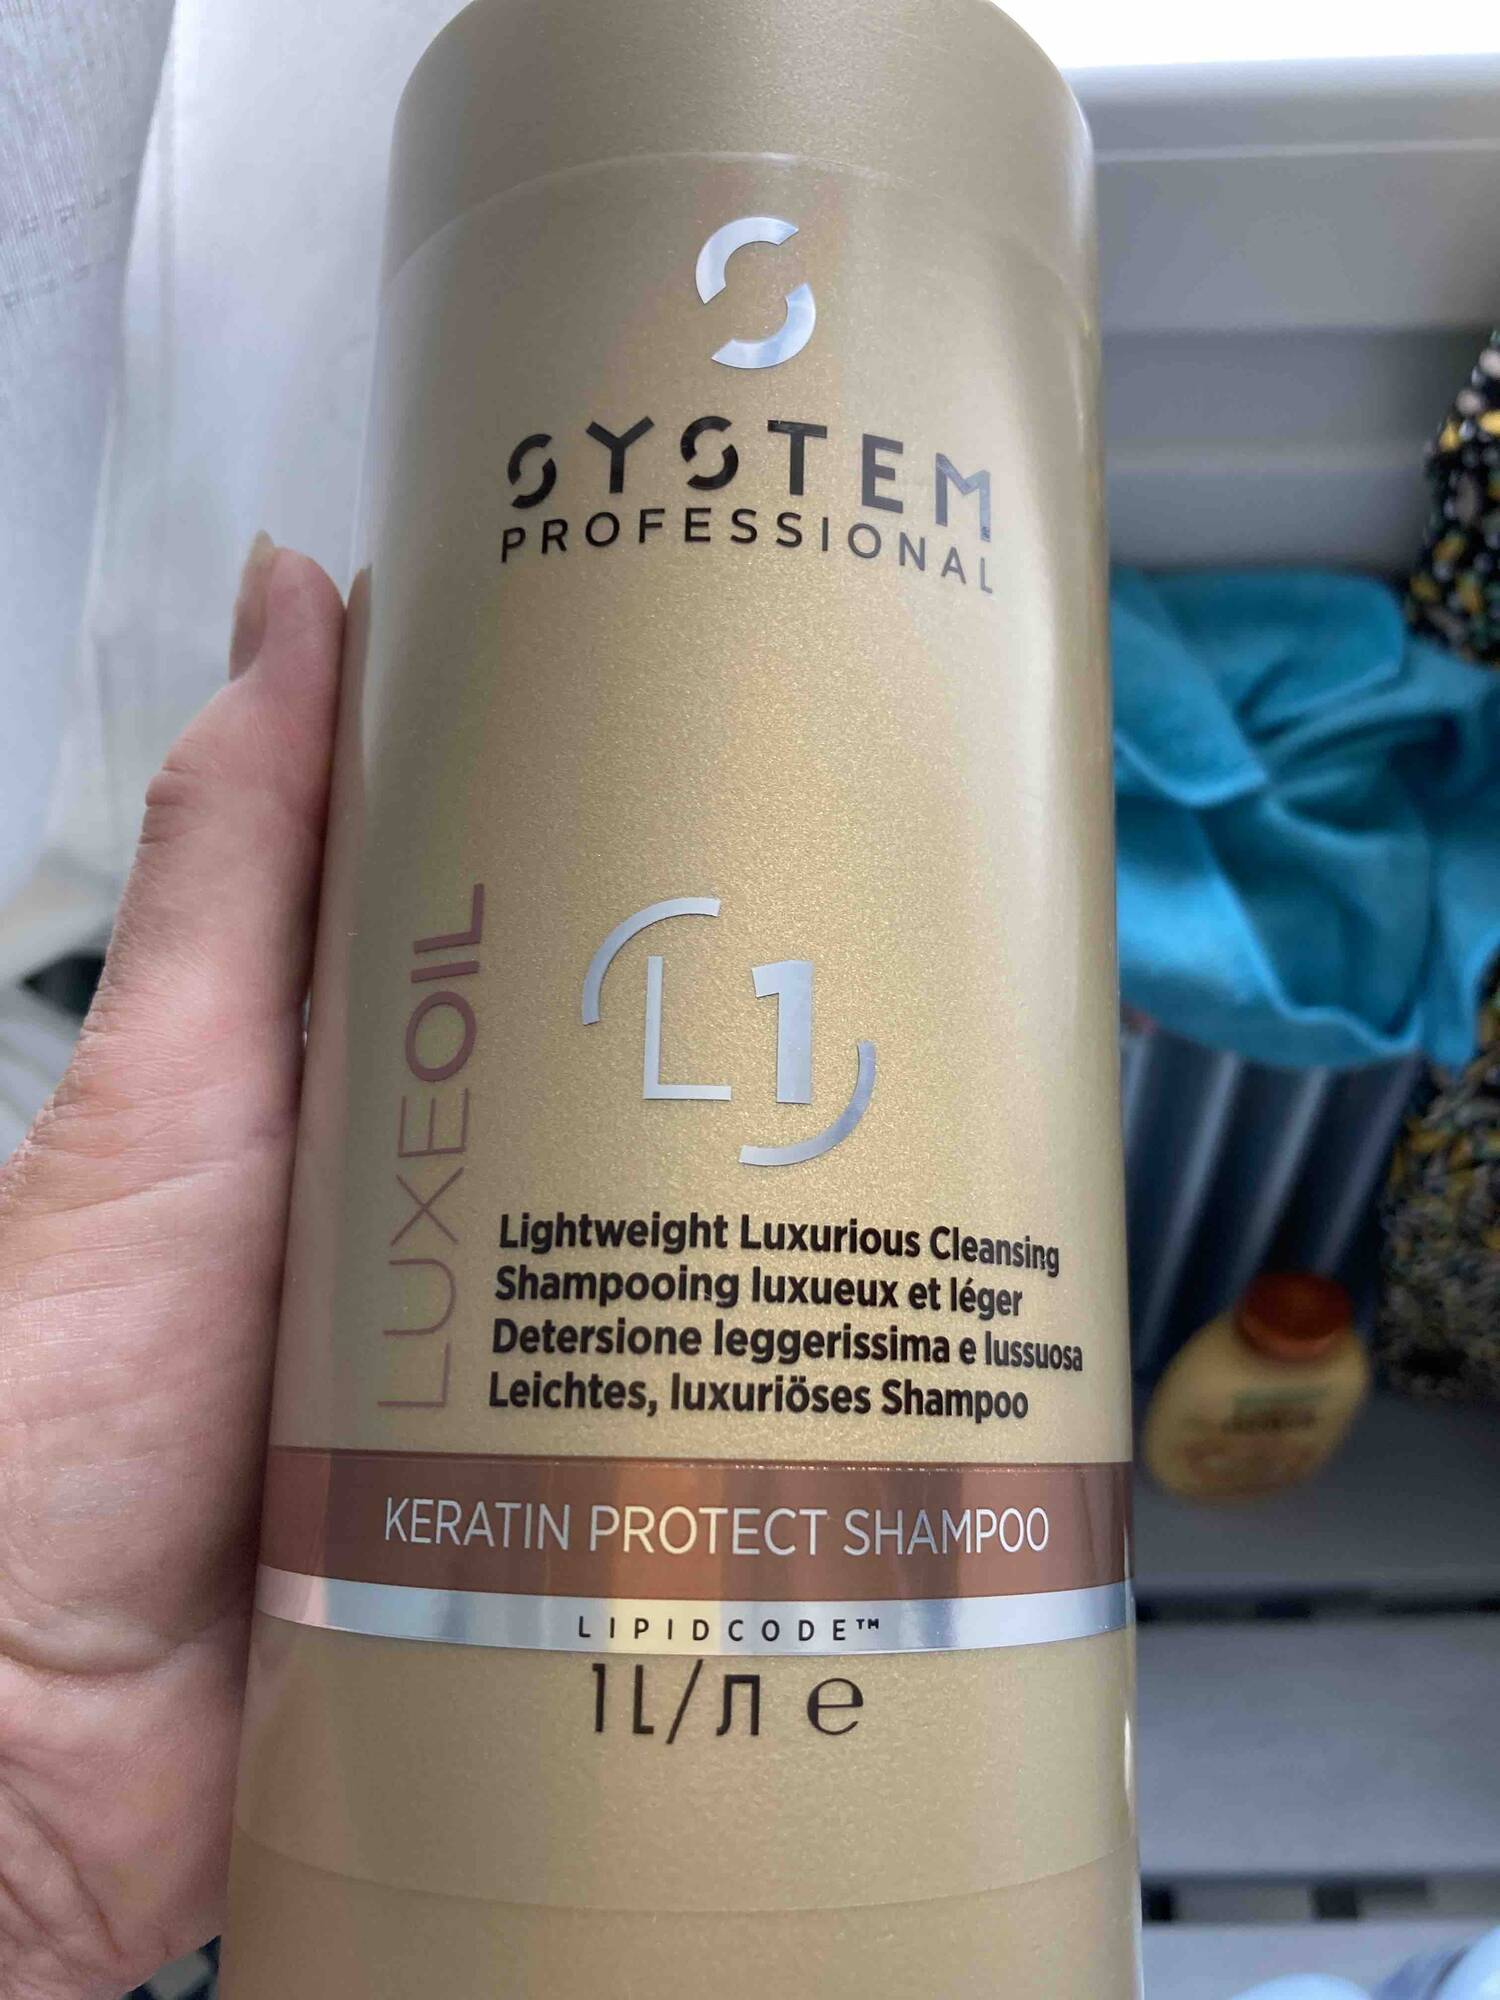 SYSTEM PROFESSIONAL - Luxe oil L1 - Shampooing luxueux et léger